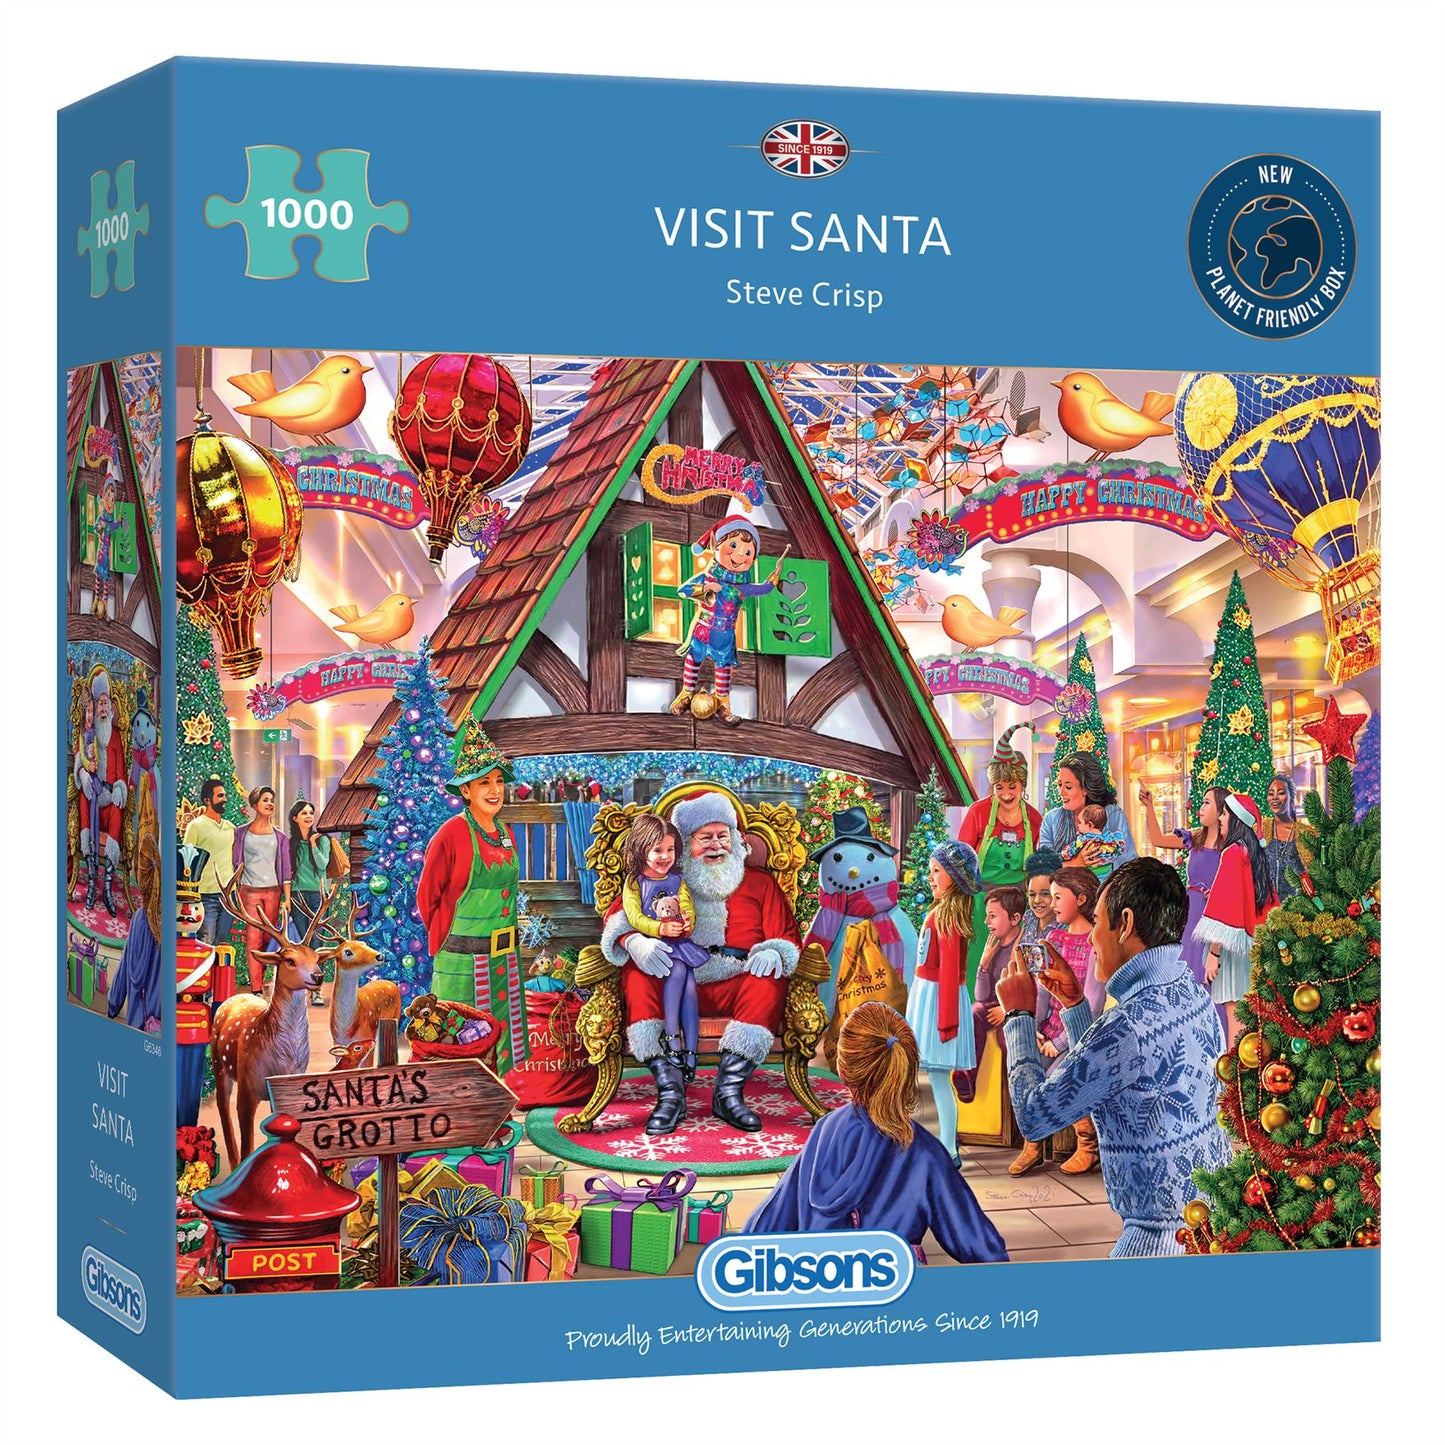 Visit Santa 1000 Piece Jigsaw Puzzle box